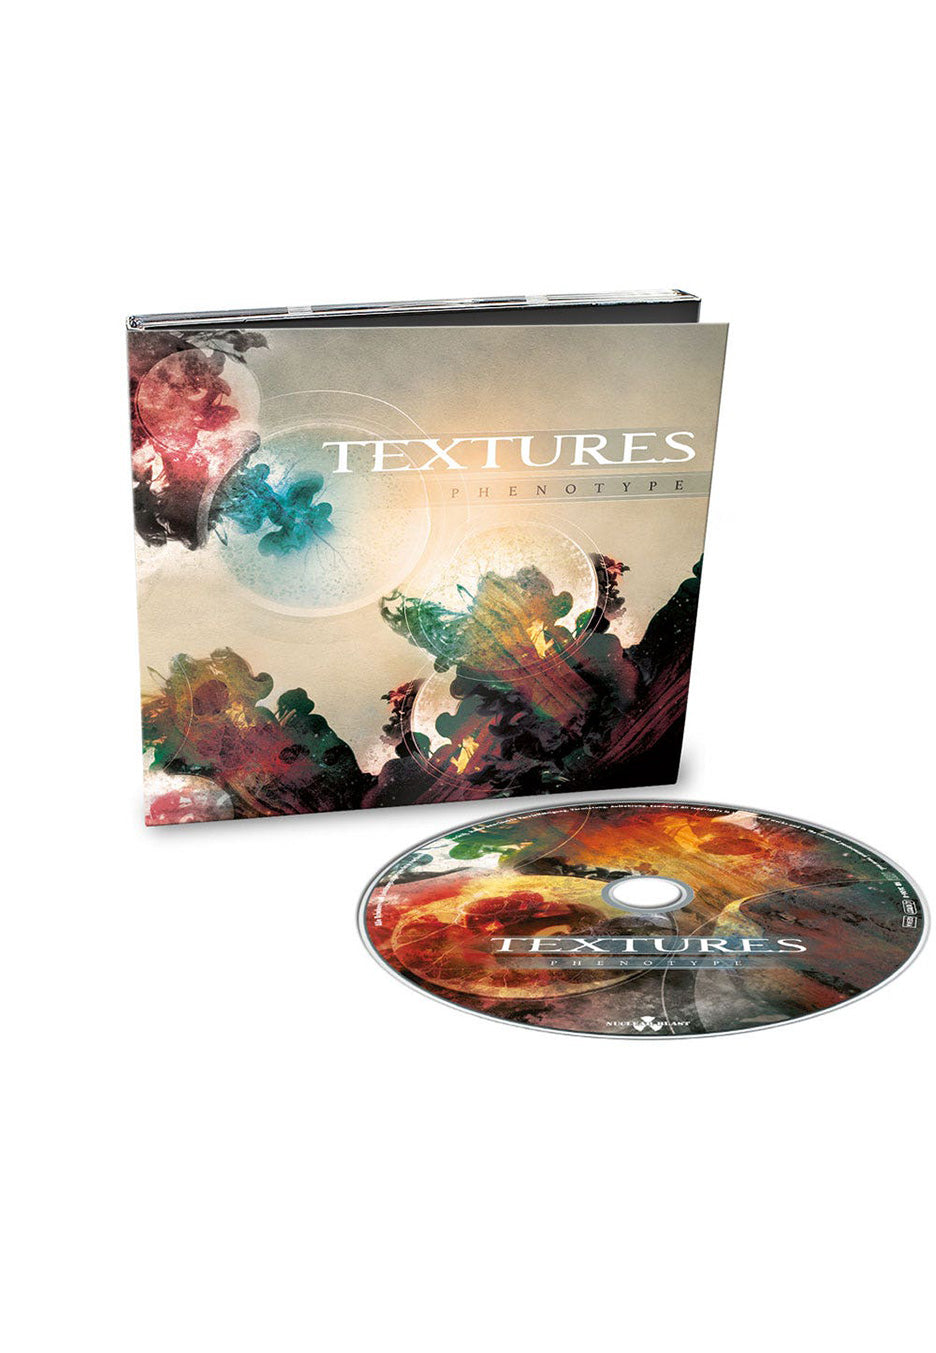 Textures - Phenotype - Digipak CD